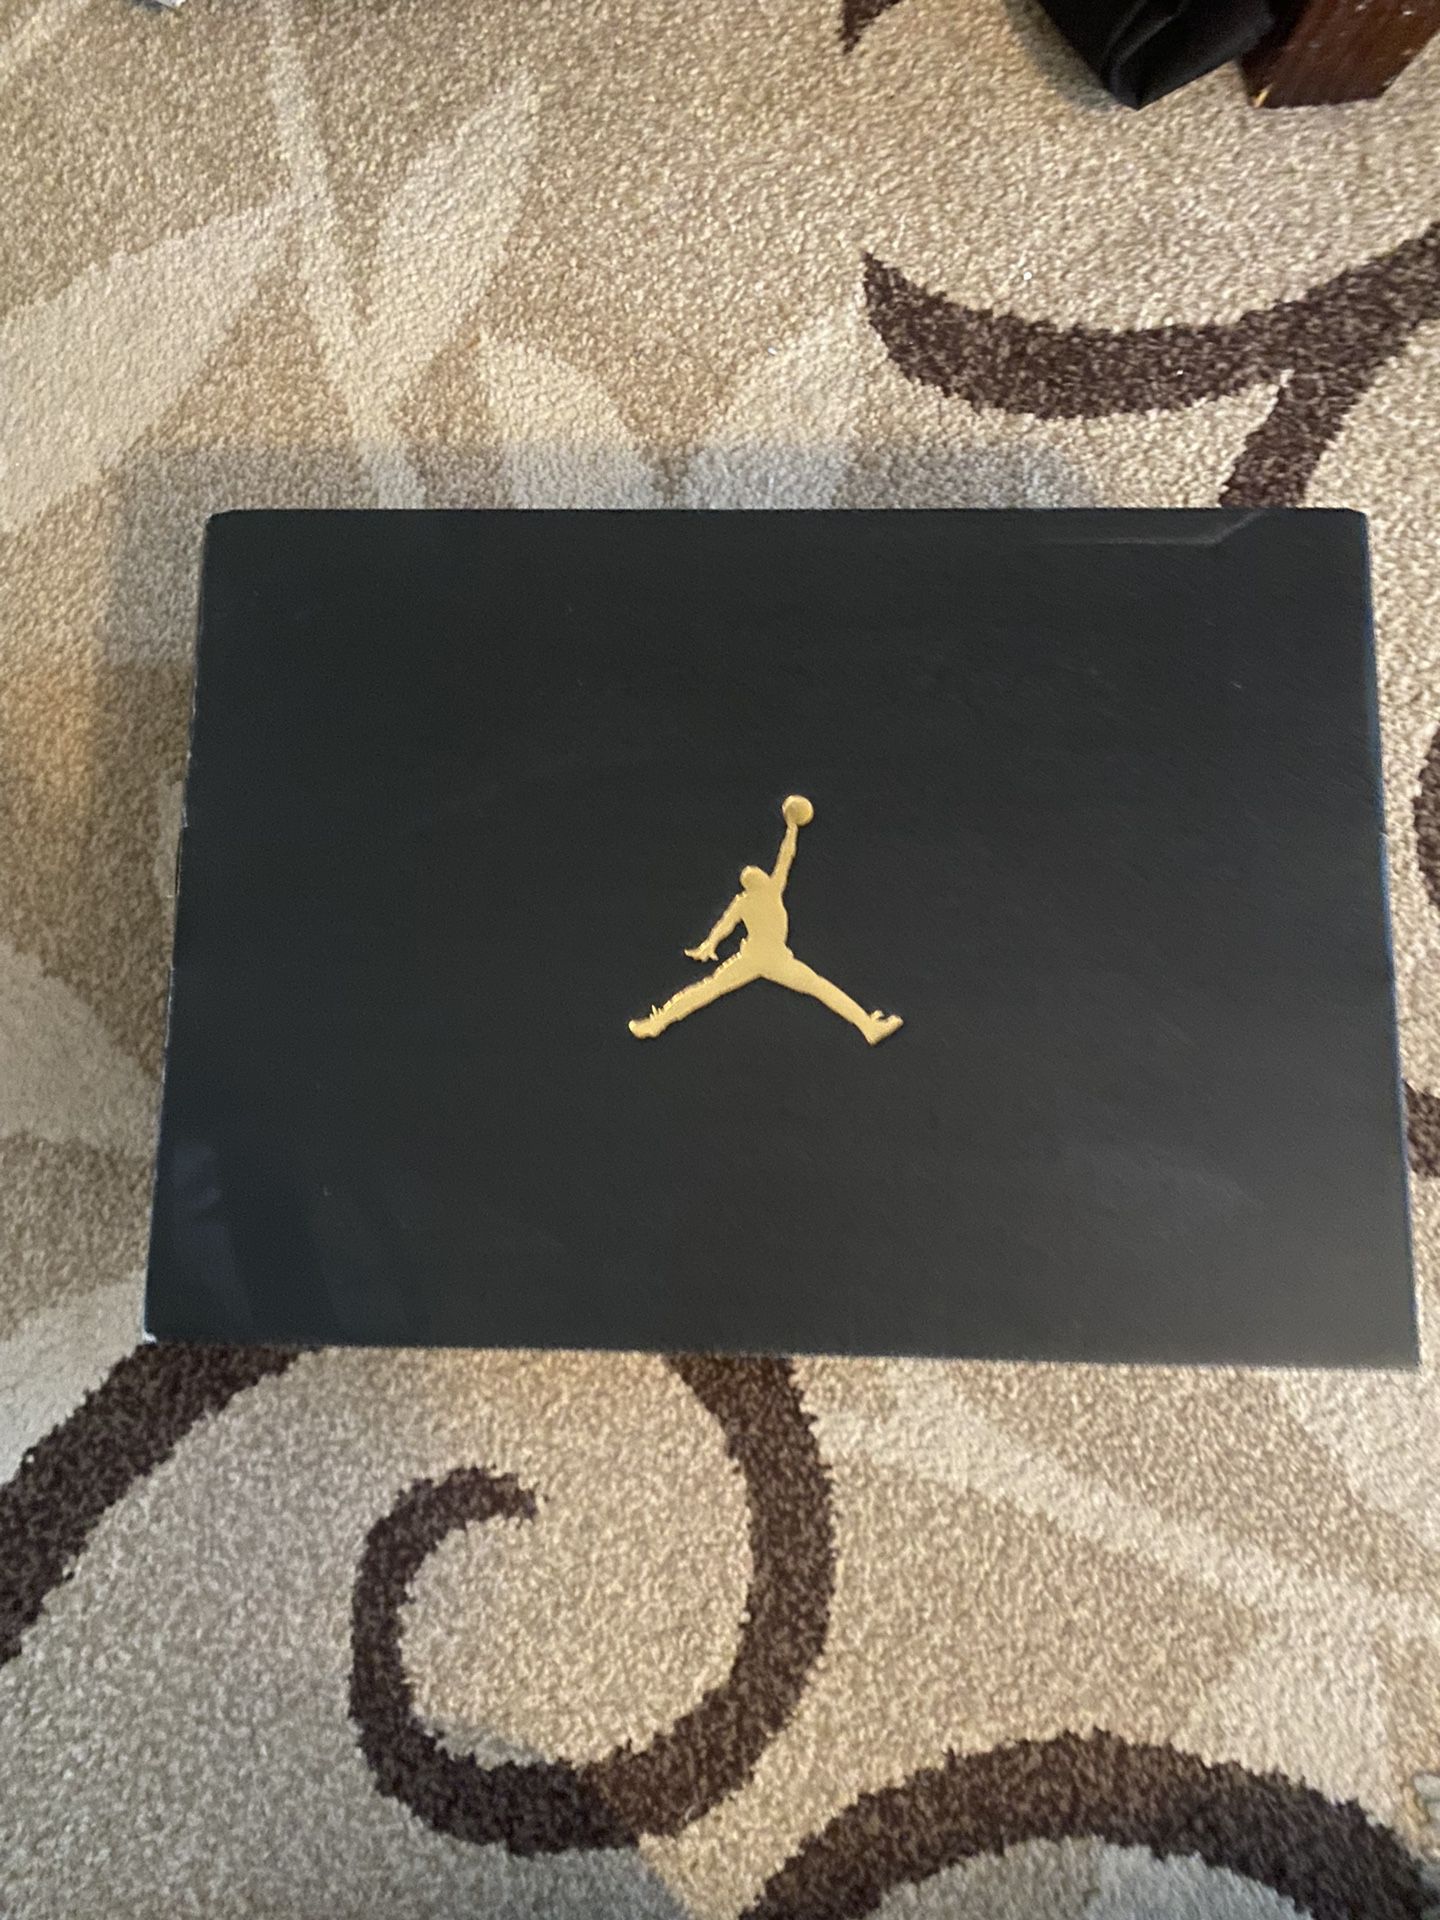 Brand New Jordan Access Size 9